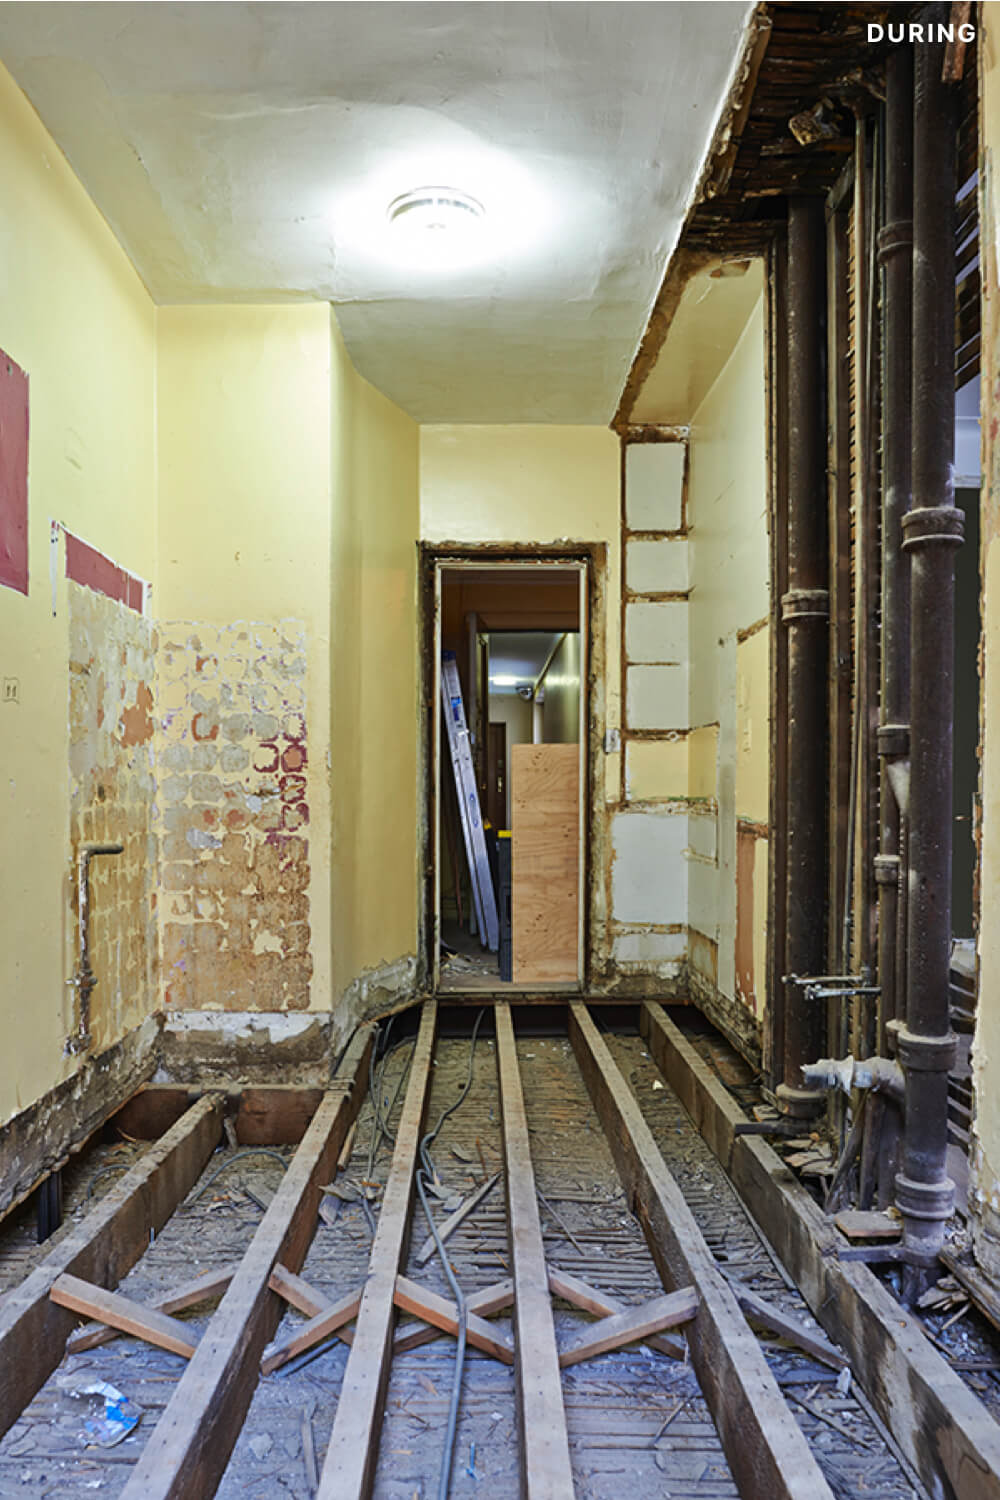 image of demolished narrow kitchen during renovation 